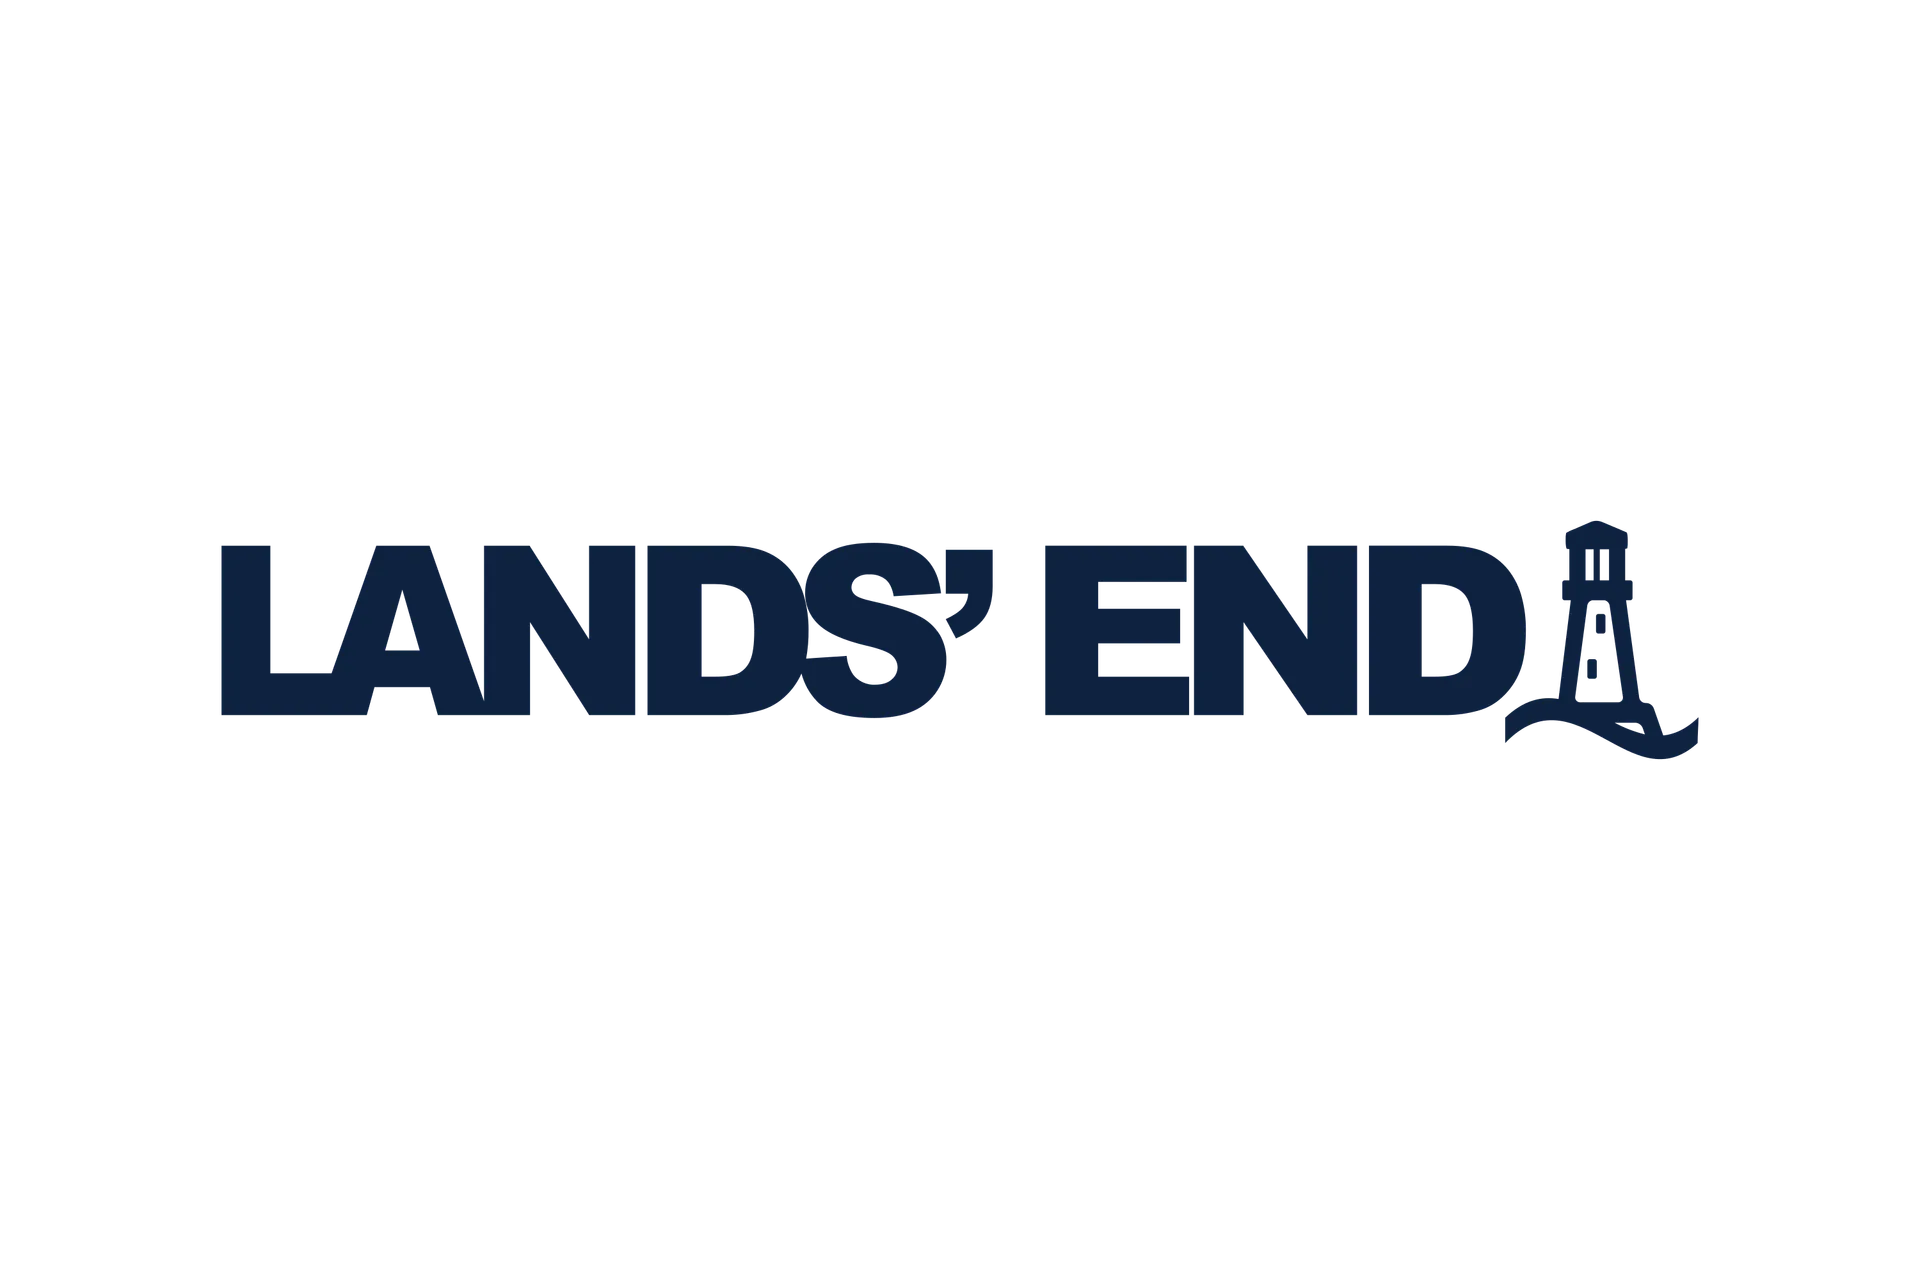 LAND'S END logo